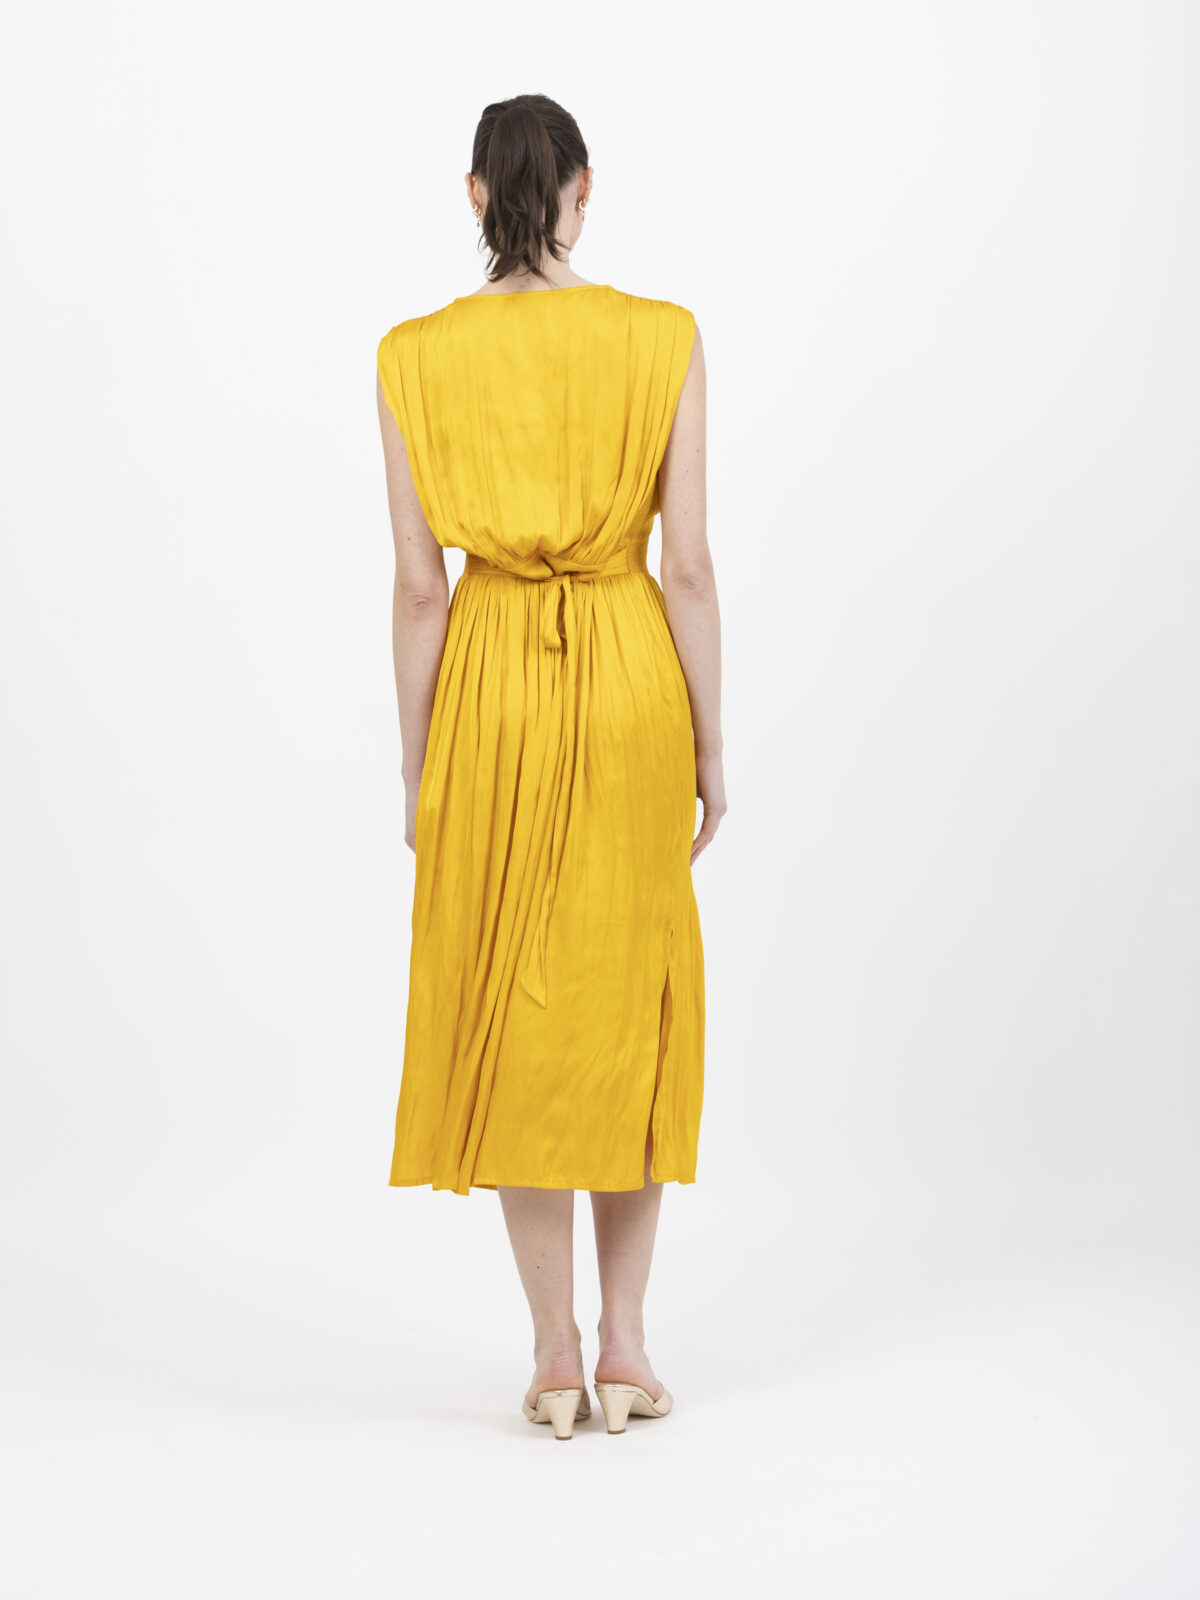 lavinia-yellow-sunny-dress-midi-sessun-matchboxathens-athens-shop-online-buy-athens